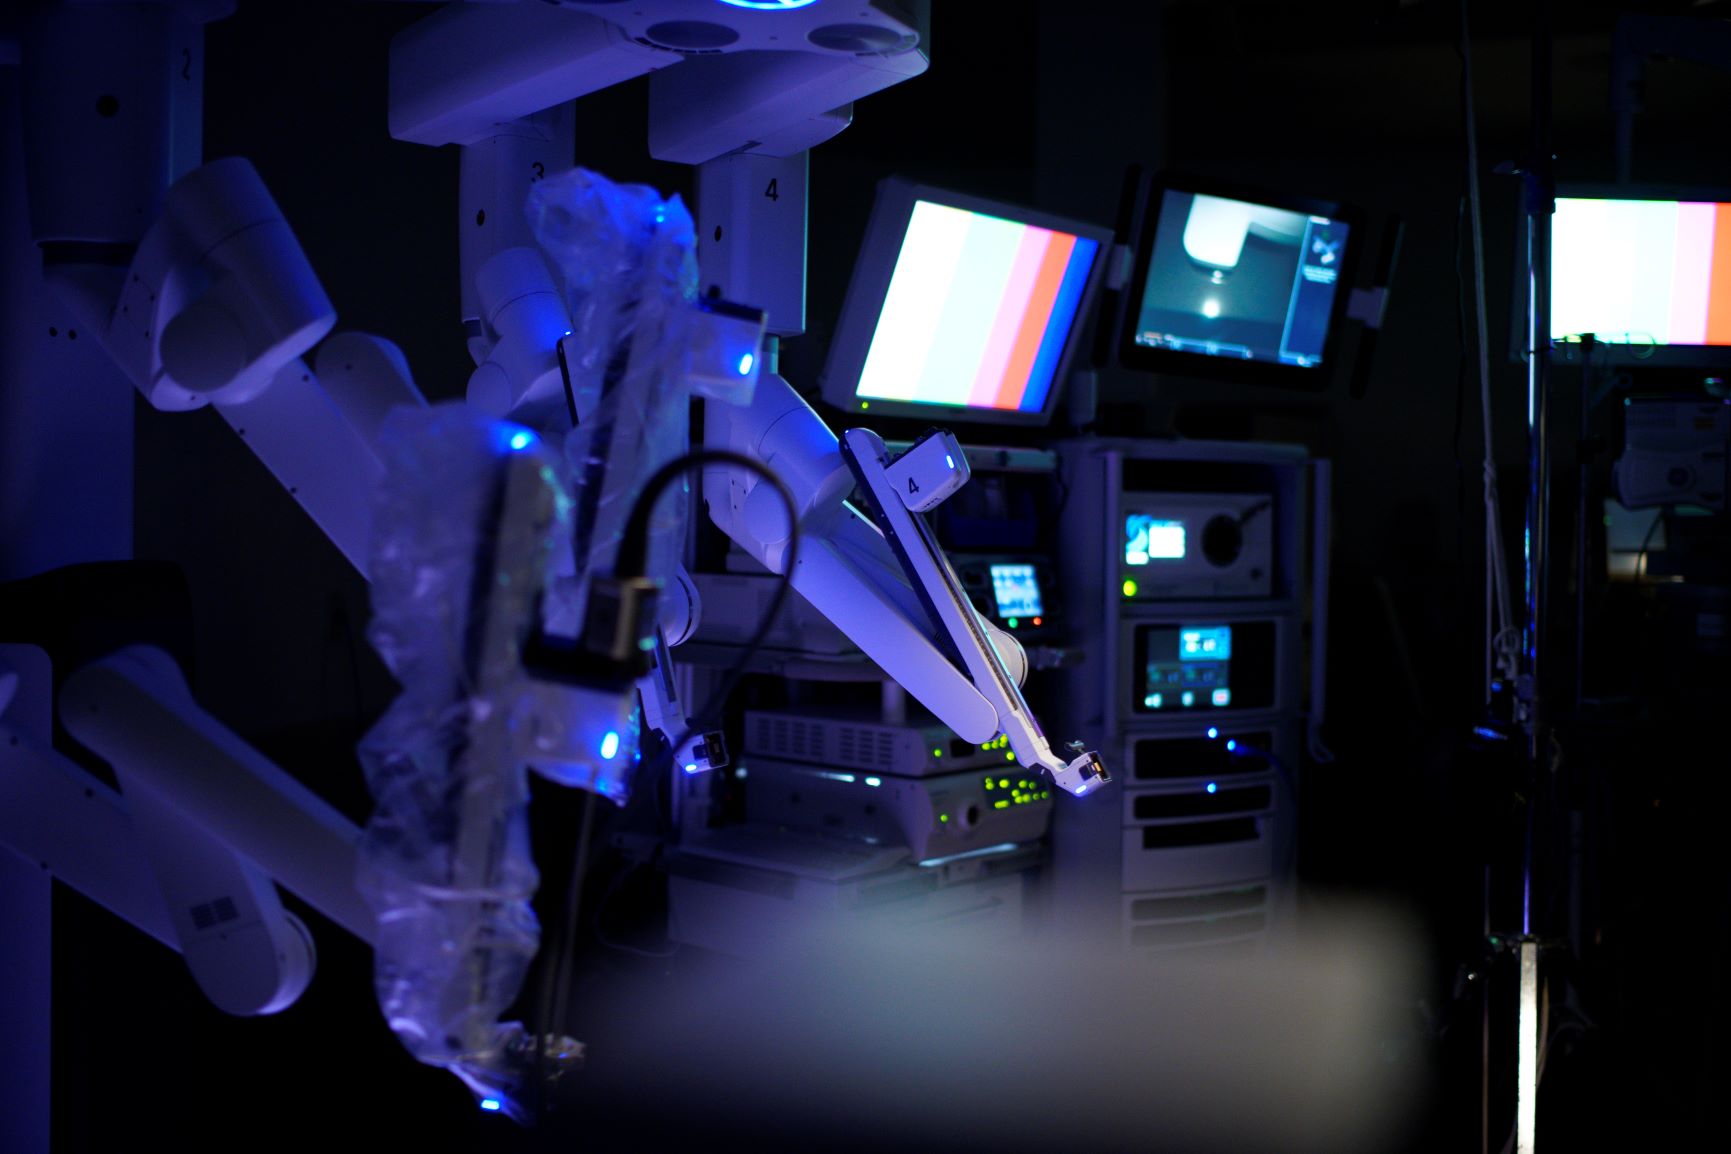 Robotic surgery equipment lit up in a dark room